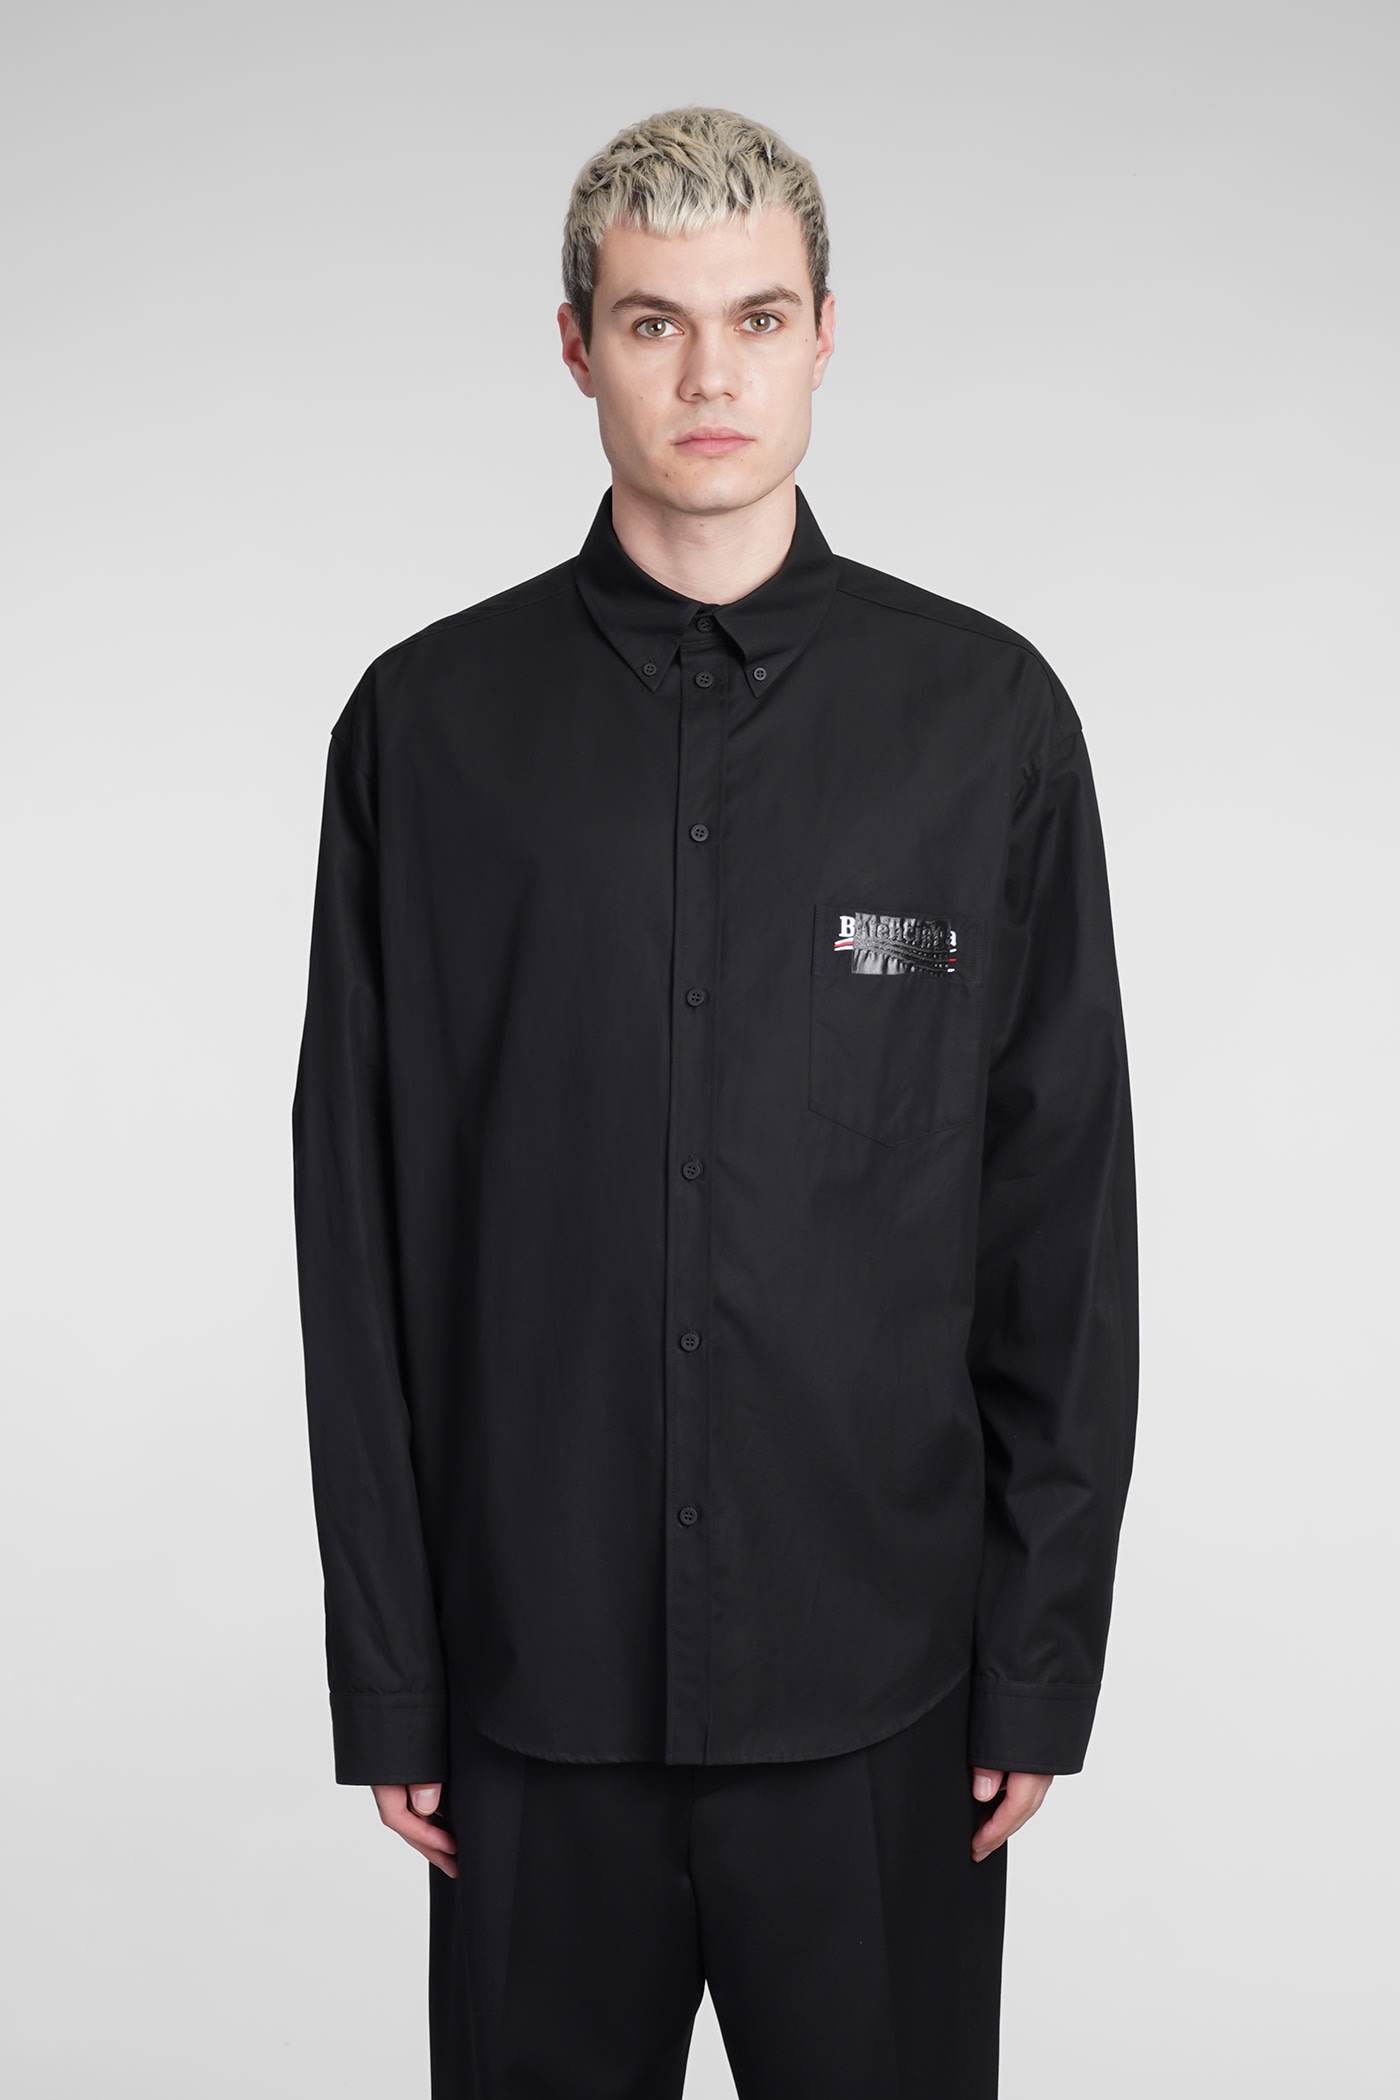 Balenciaga Shirt In Black Denim